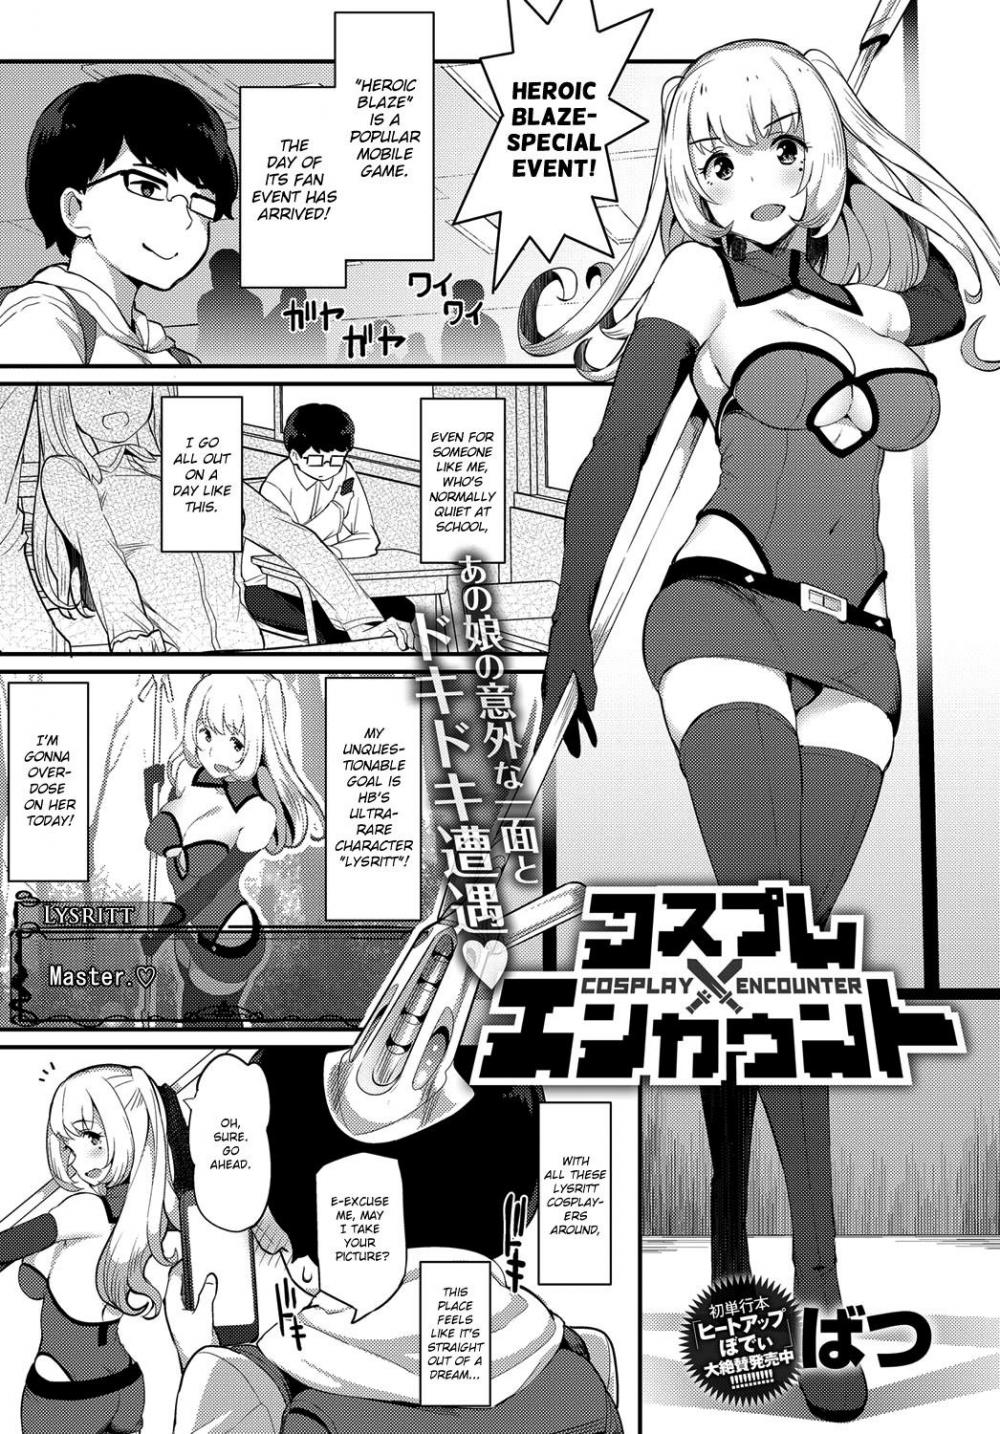 Hentai Manga Comic-Cosplay Encounter-Read-1